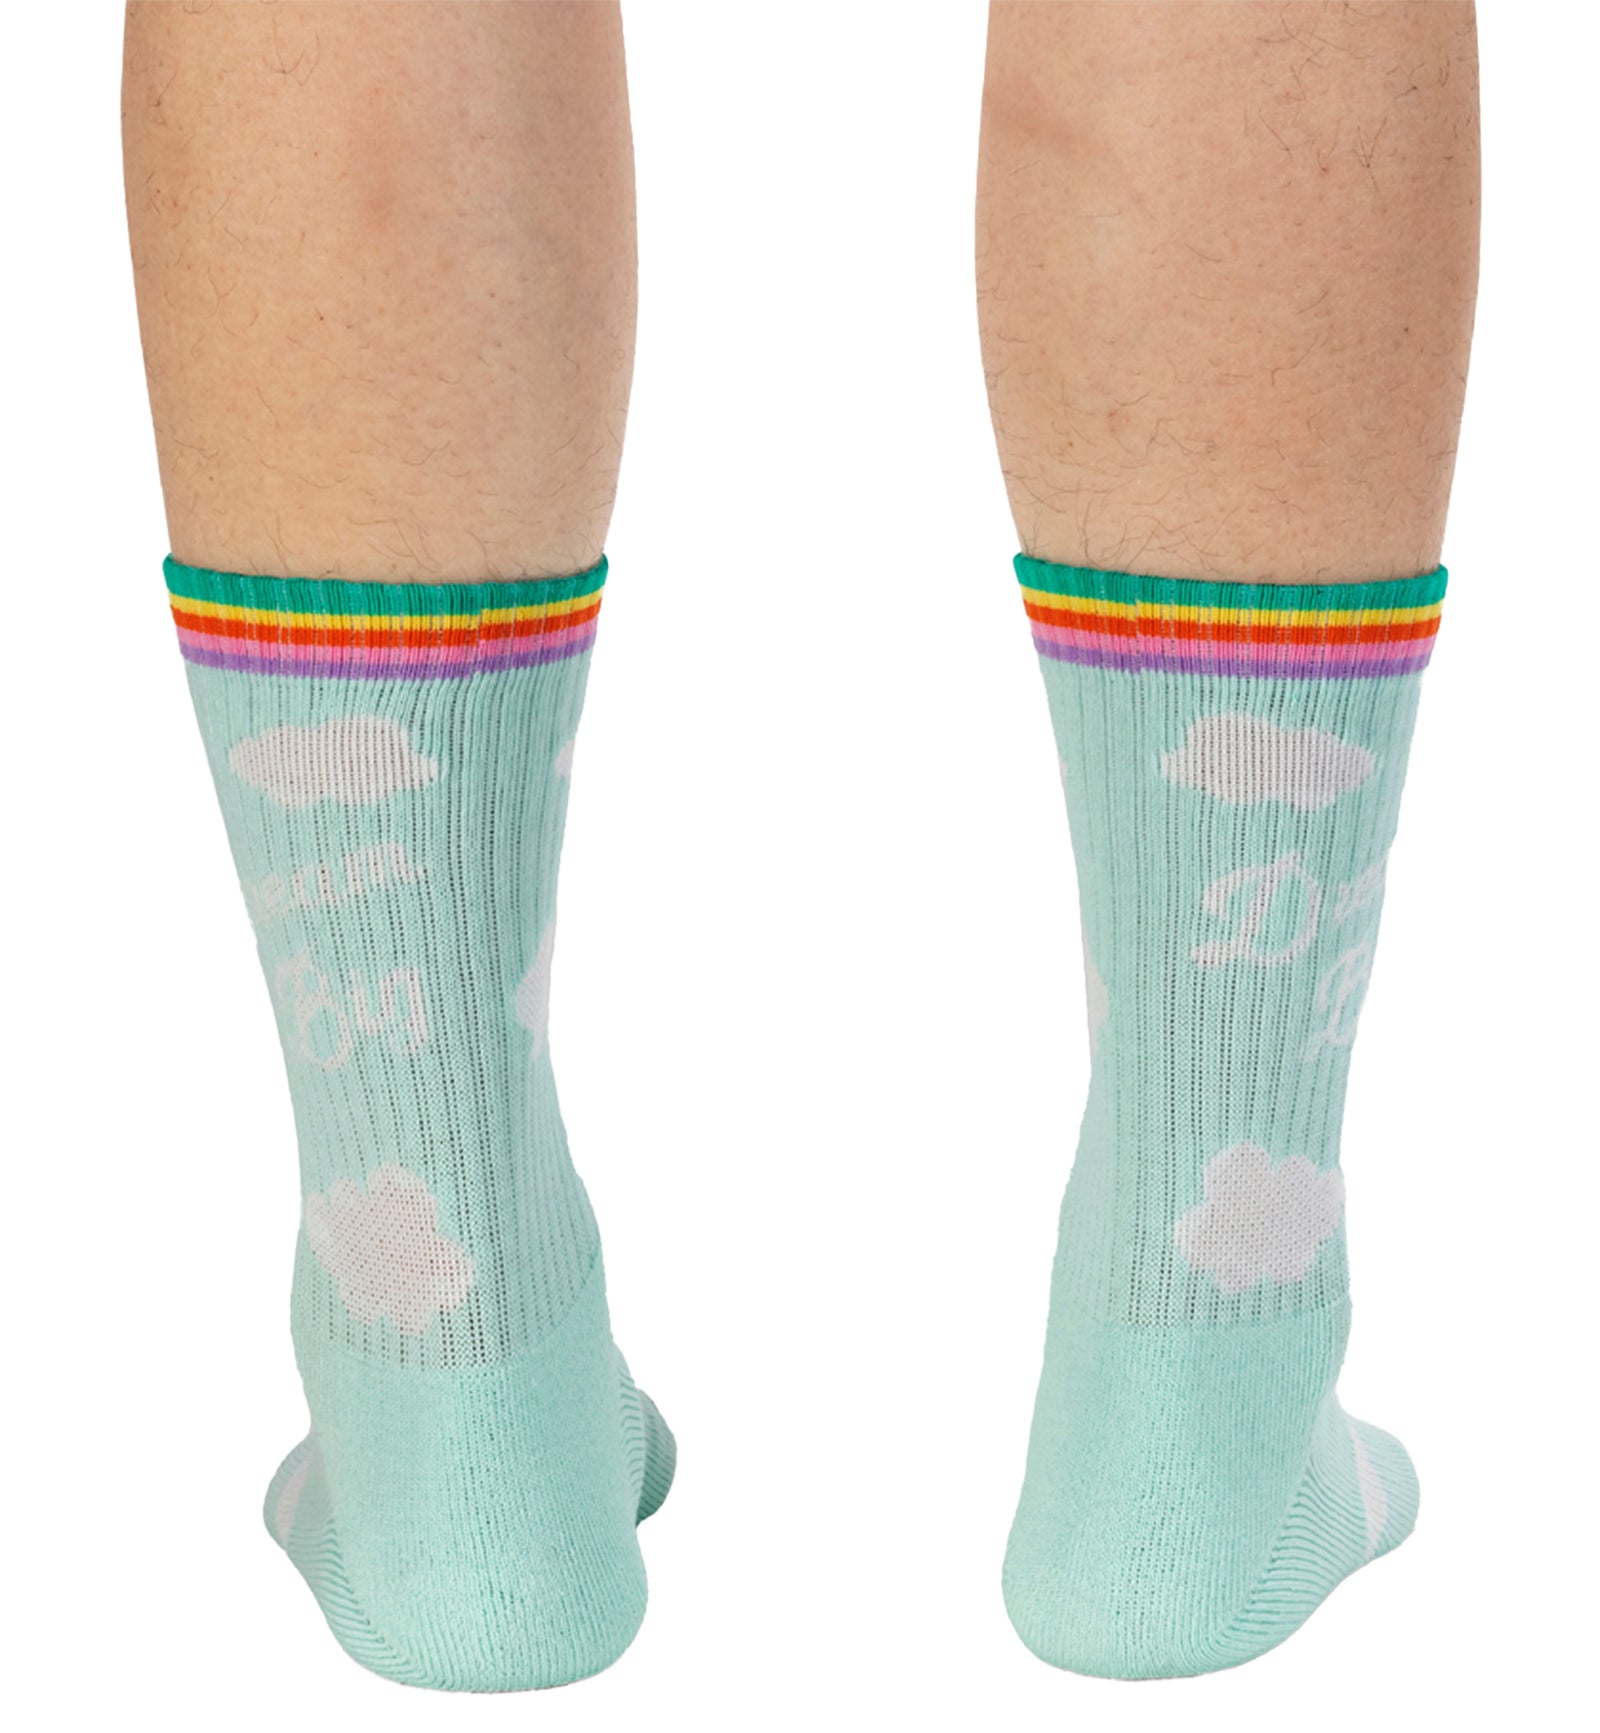 SOCK it to me Athletic Ribbed Crew Socks (R0014),Dream Big - Dream Big,One Size